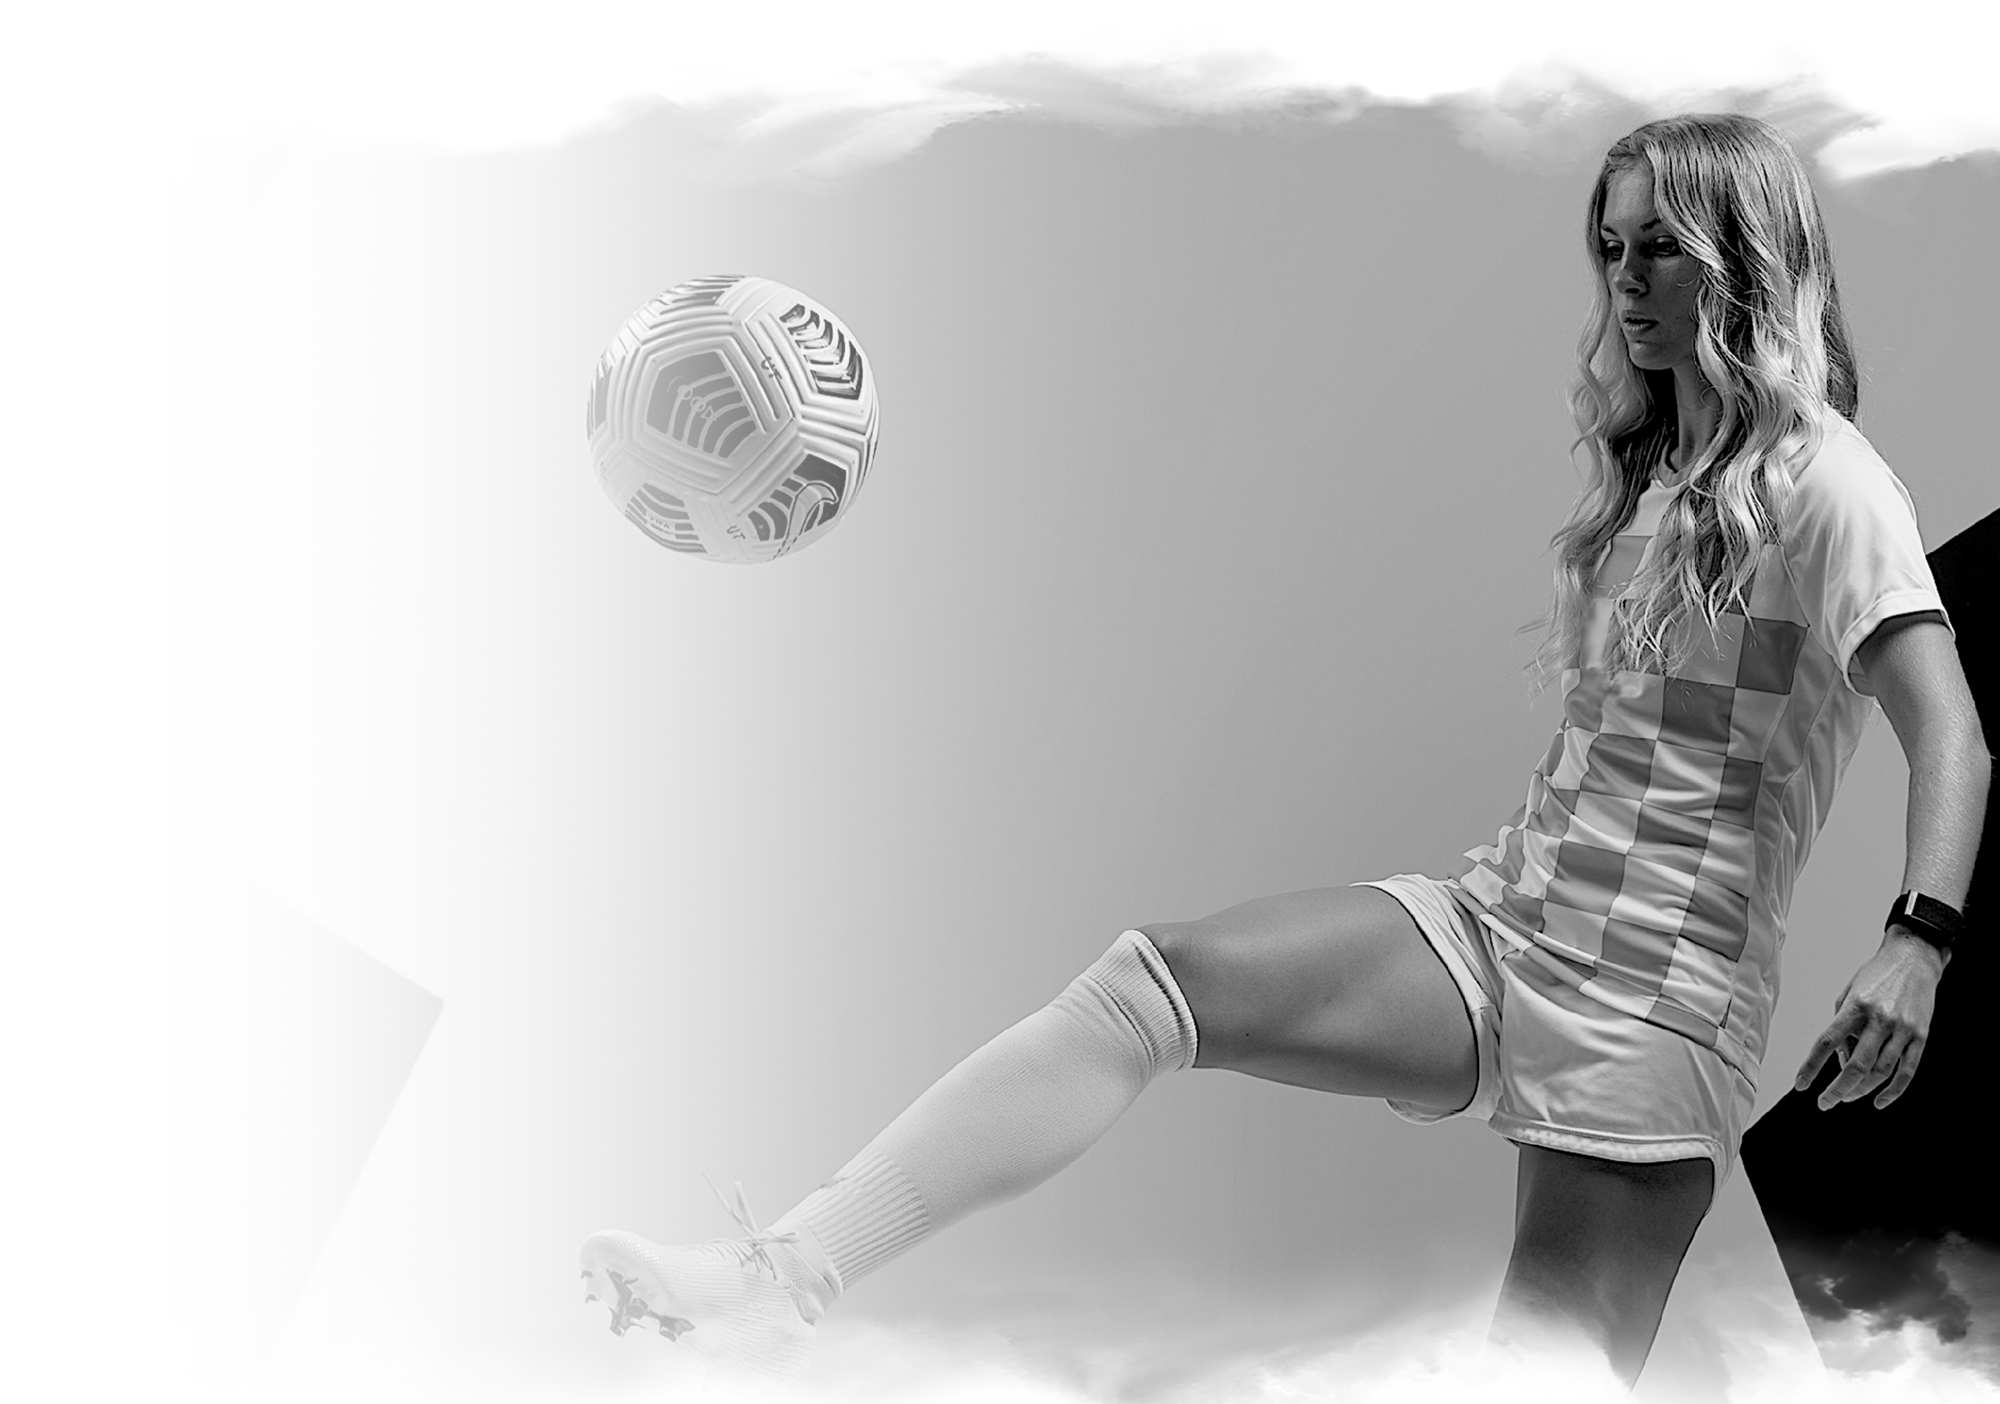 a woman dribbling on a soccer ball